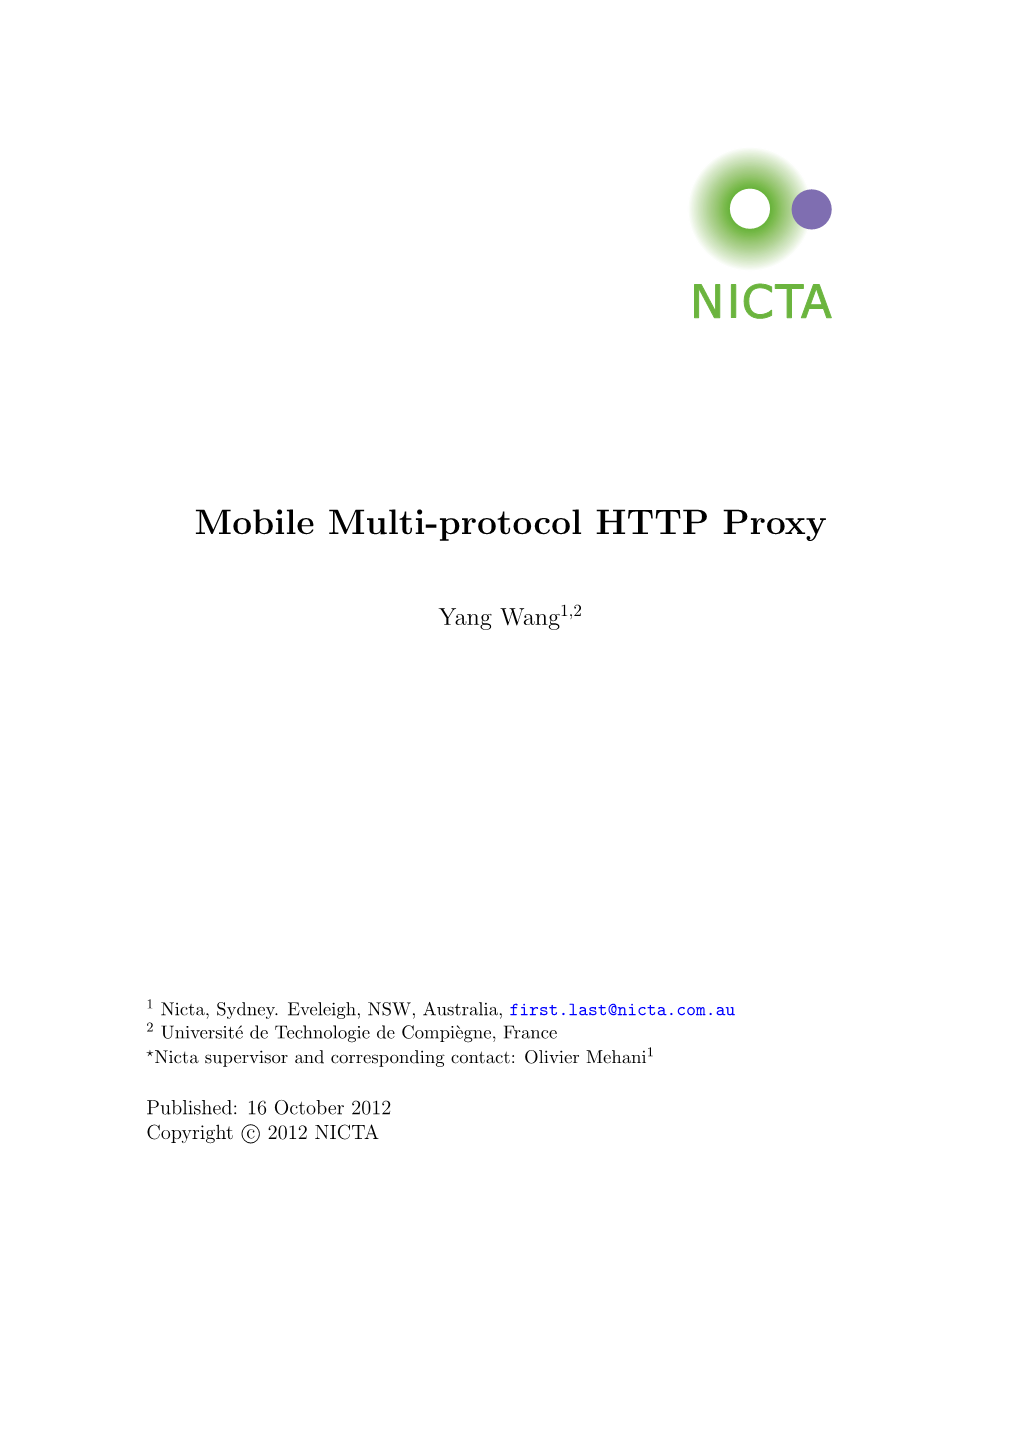 Mobile Multi-Protocol HTTP Proxy